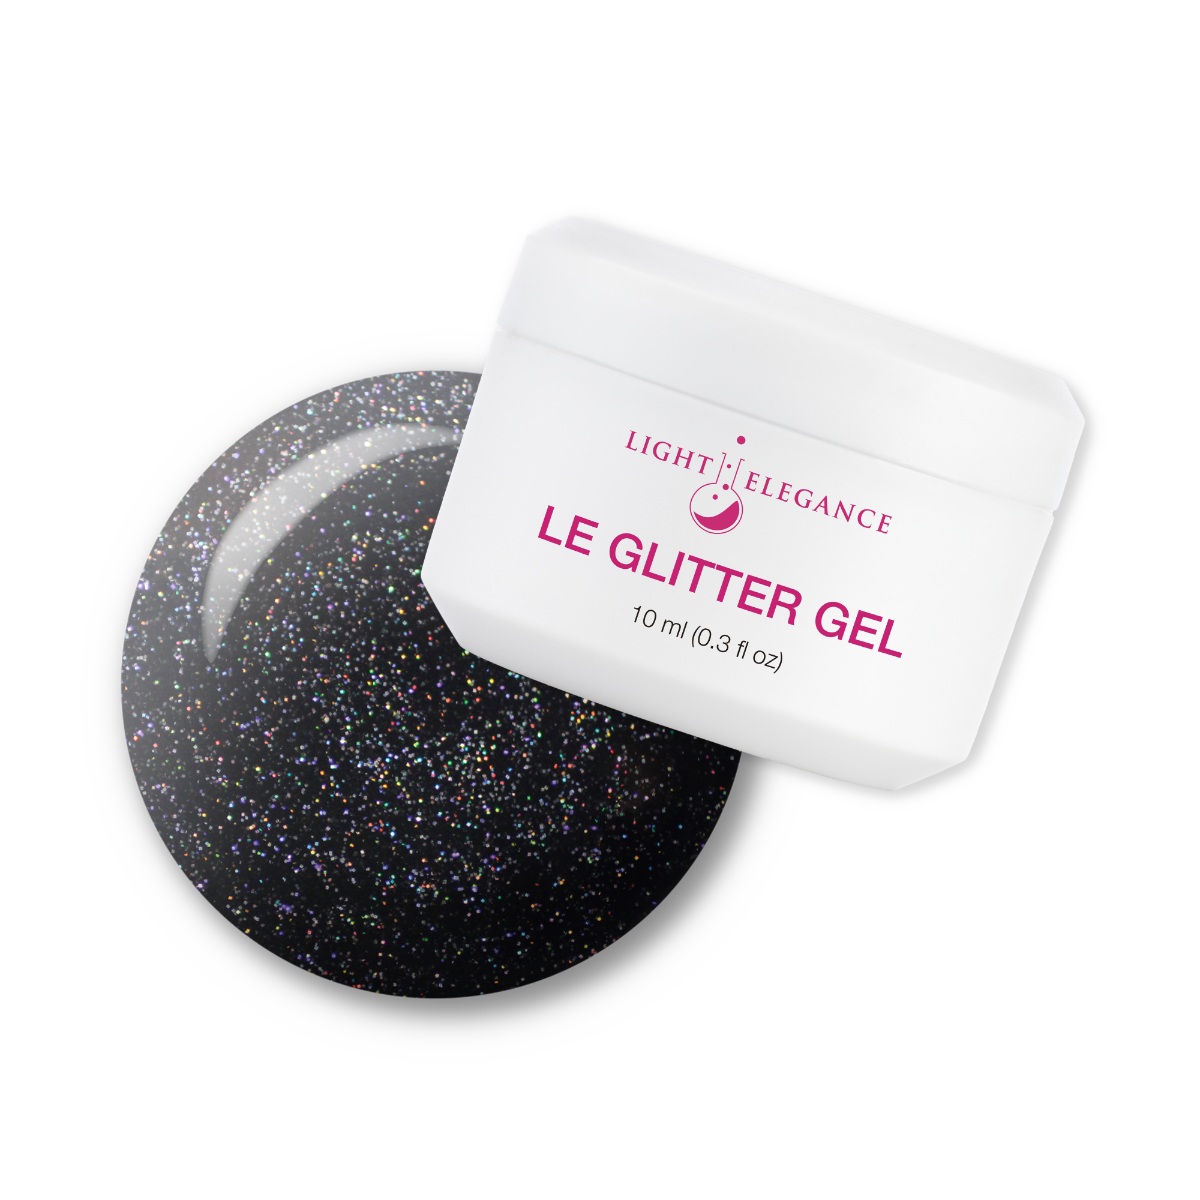 Light Elegance Glitter Gel - Smokin' Hot Pepper :: New Packaging - Creata Beauty - Professional Beauty Products